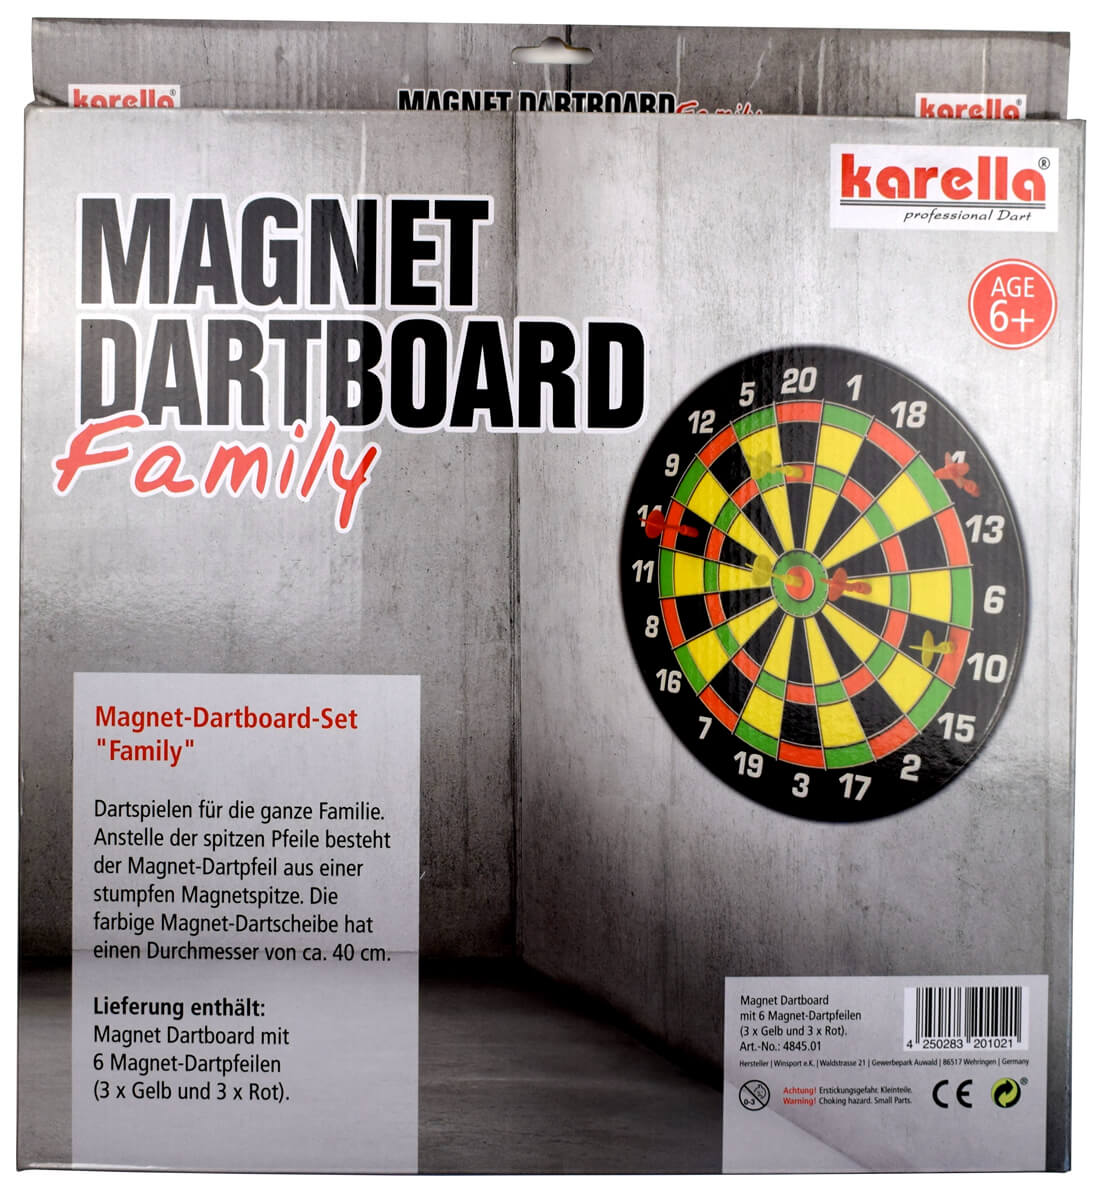 Karella Magnet-Dartboard-Set Family